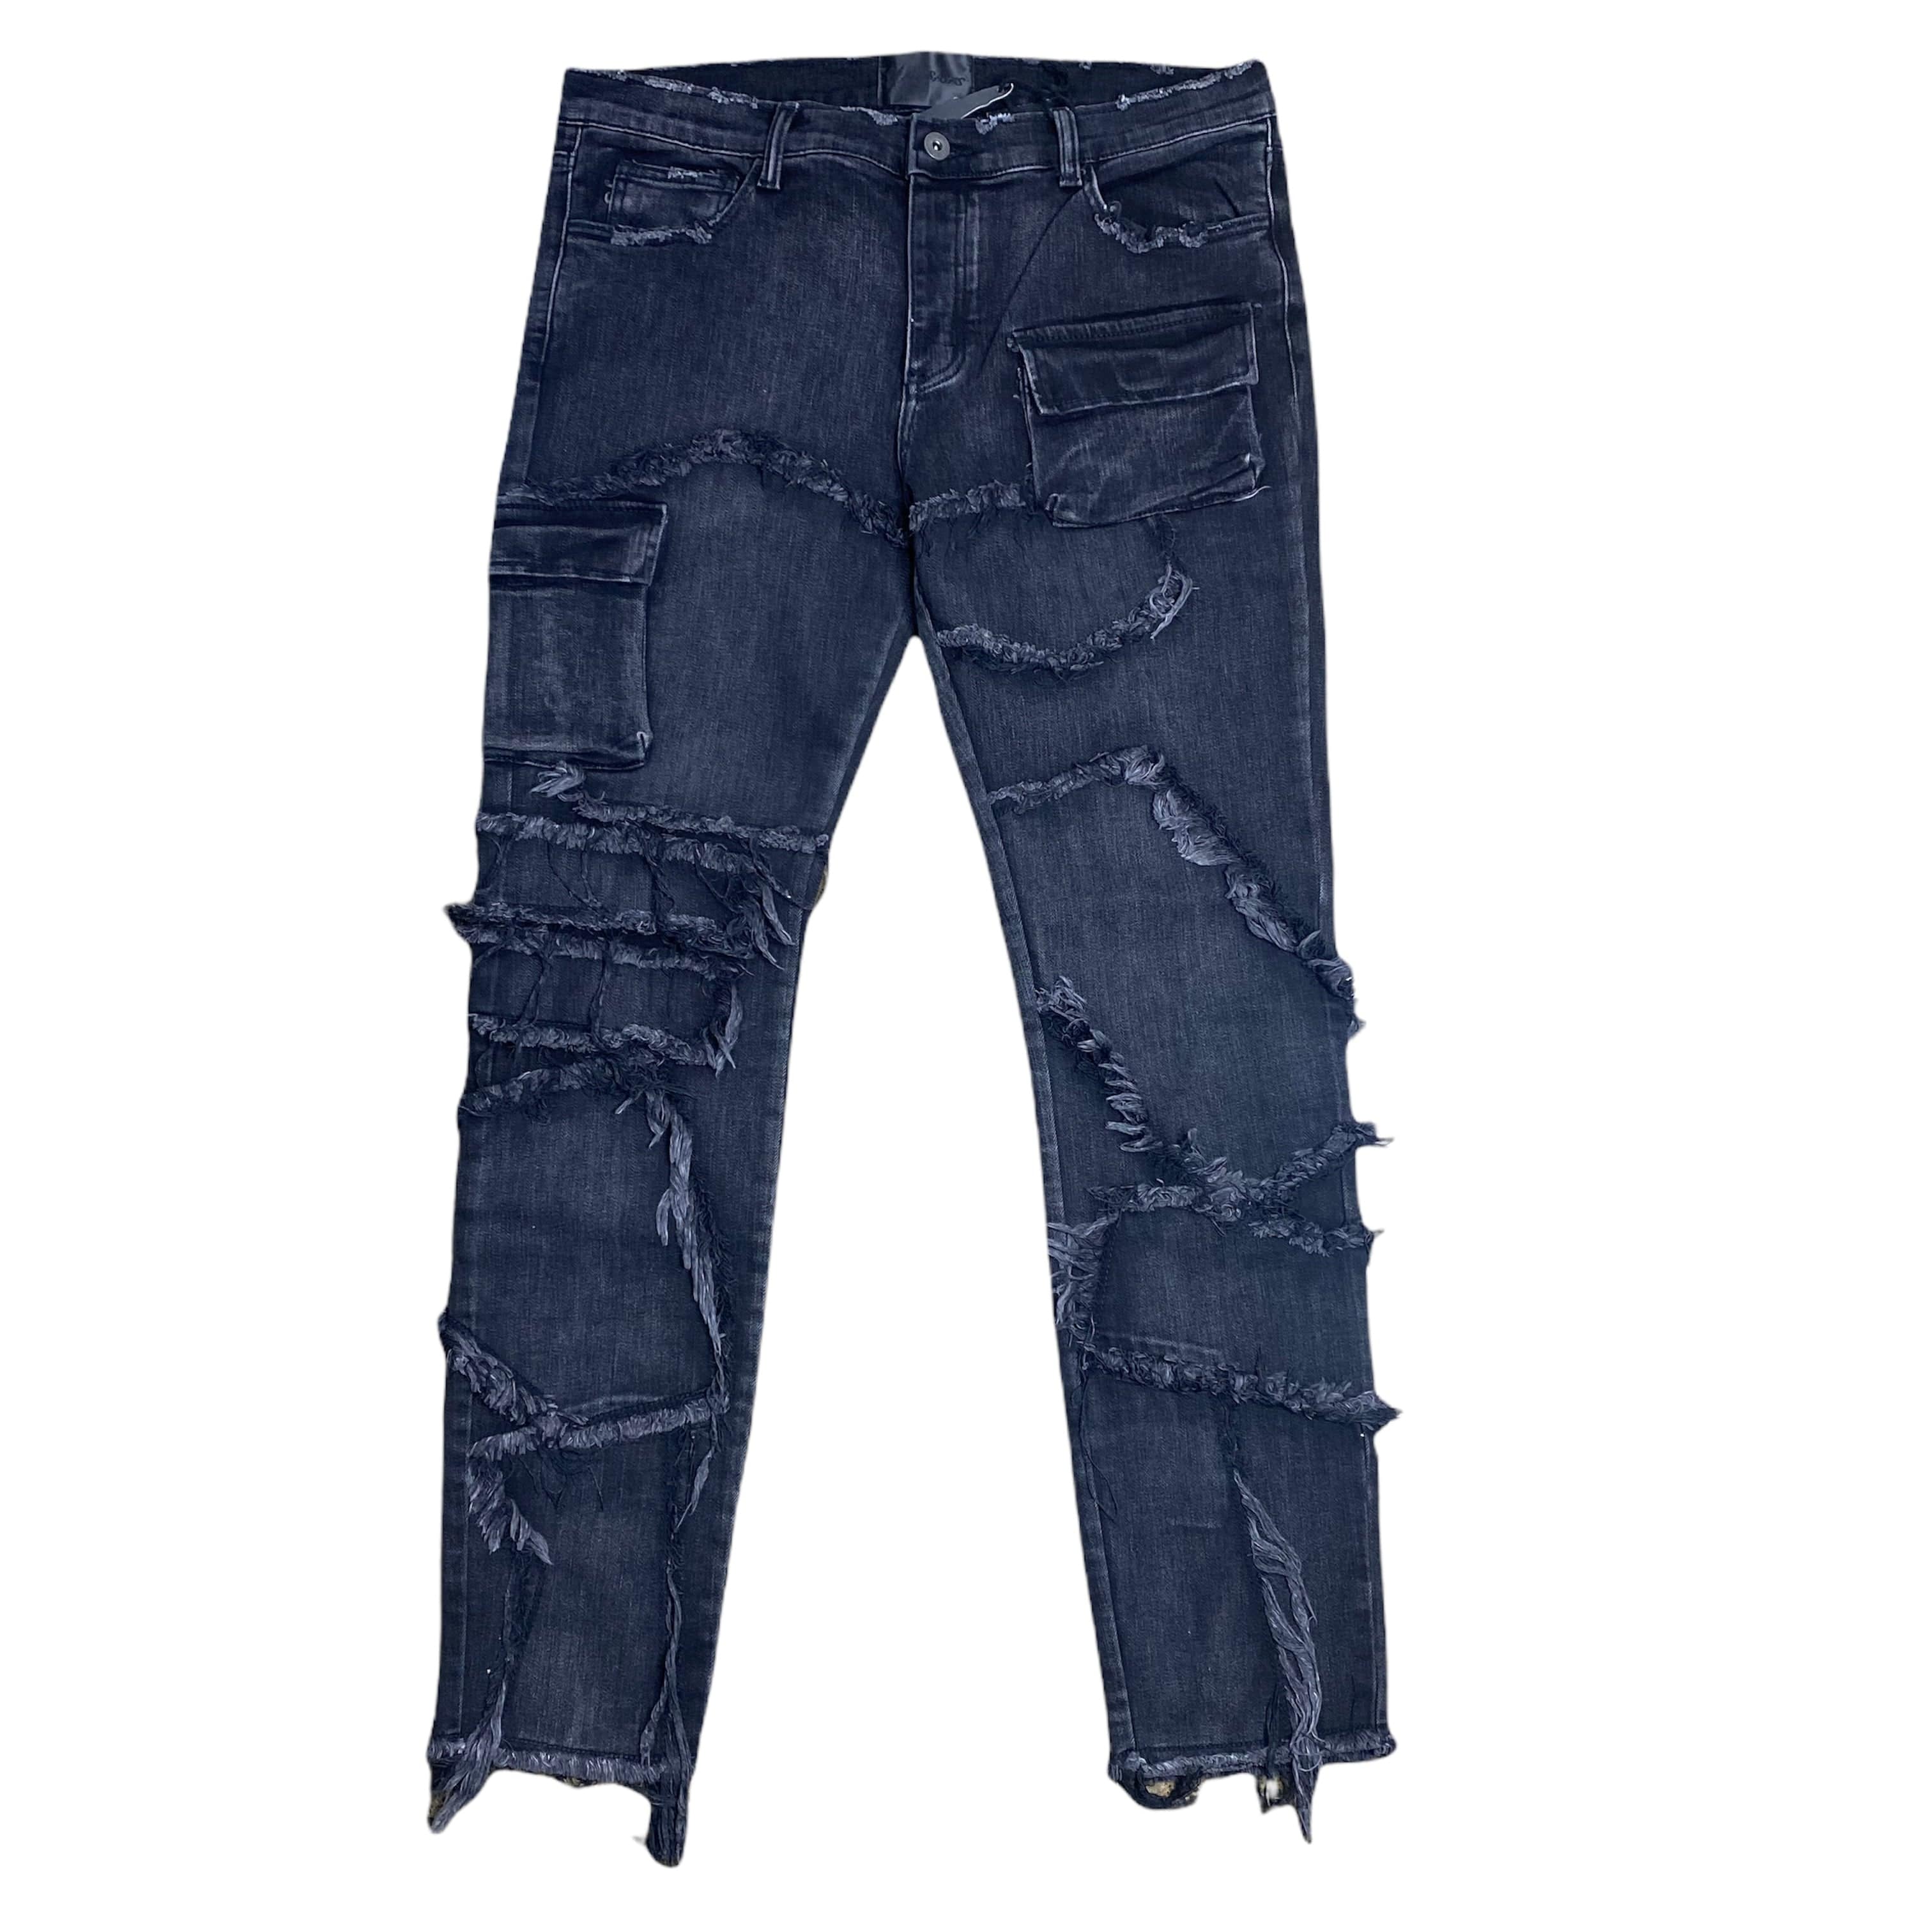 Valabasas Jeans (Black Washed)- VLBS2180 – City Man USA